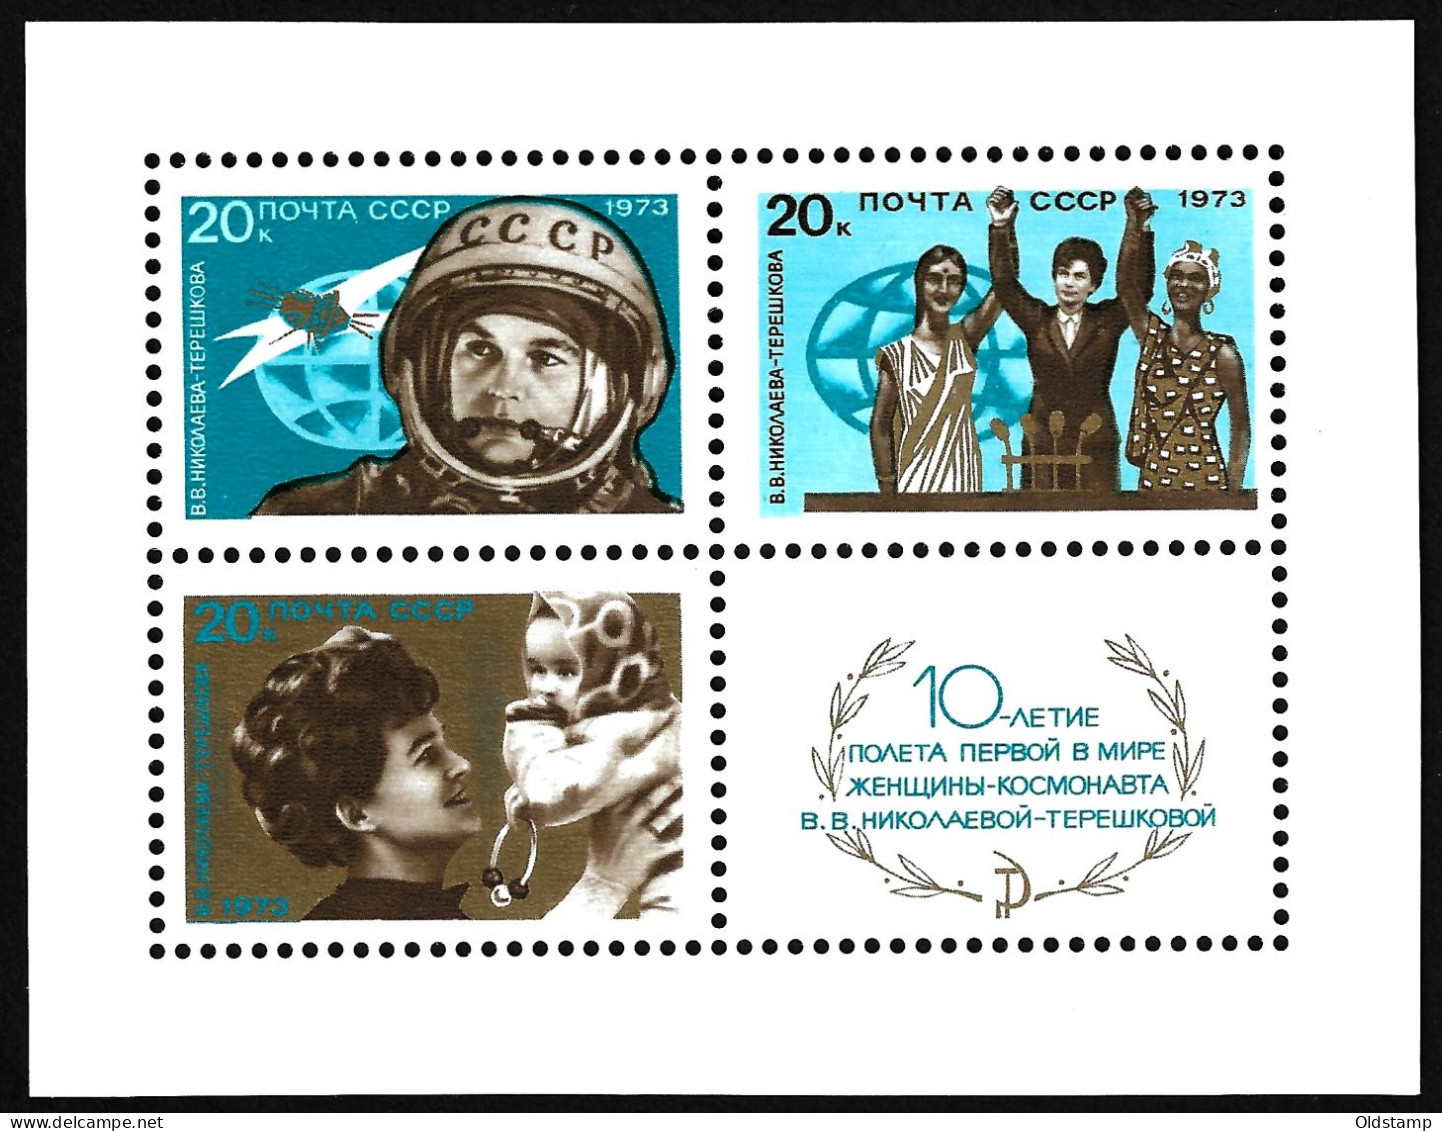 SPACE USSR 1973 MNH GAGARIN Soviet Union 20k. Space Gagarin 10th Flight Tereshkova MNH Stamp Mi. Block # - Collections